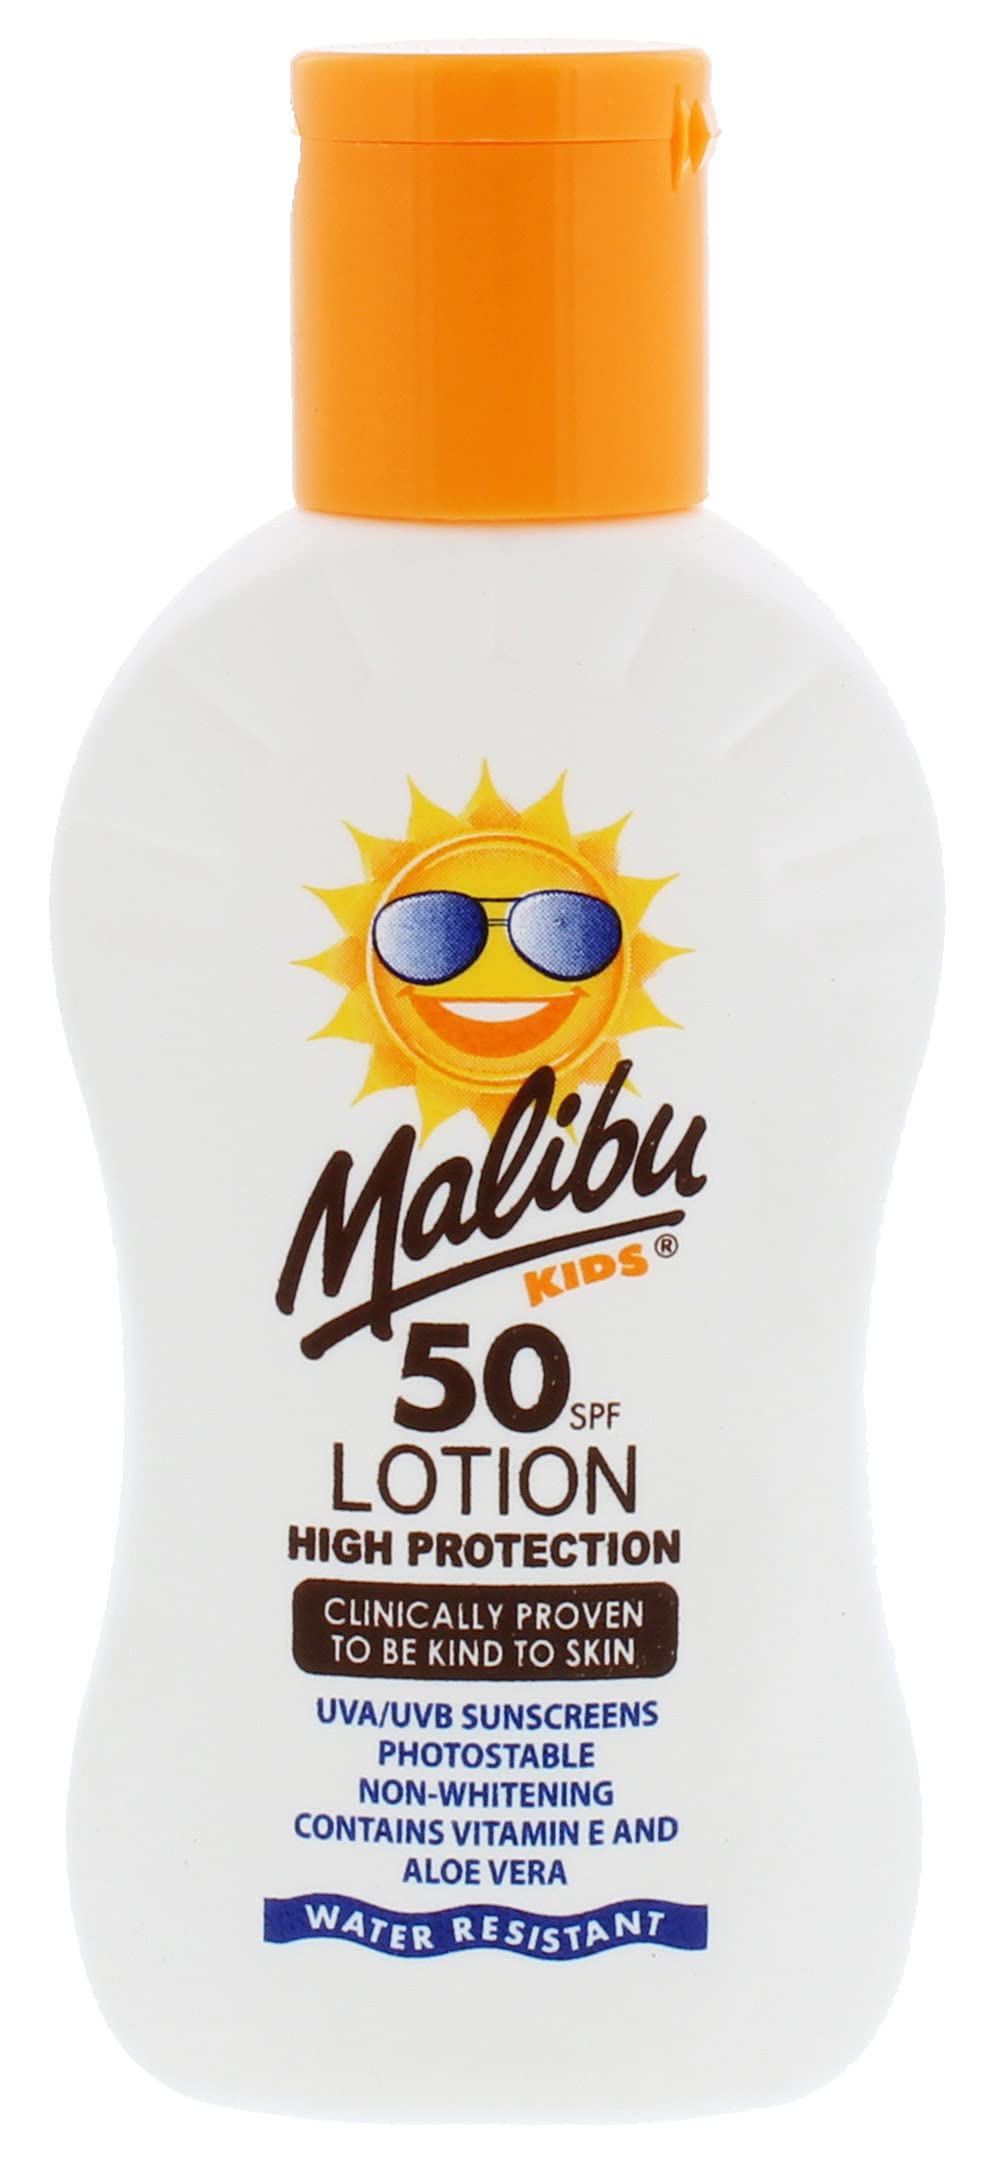 Malibu Kids High Protection Water Resistant SPF 50 Sun-Screen Lotion, 100ml